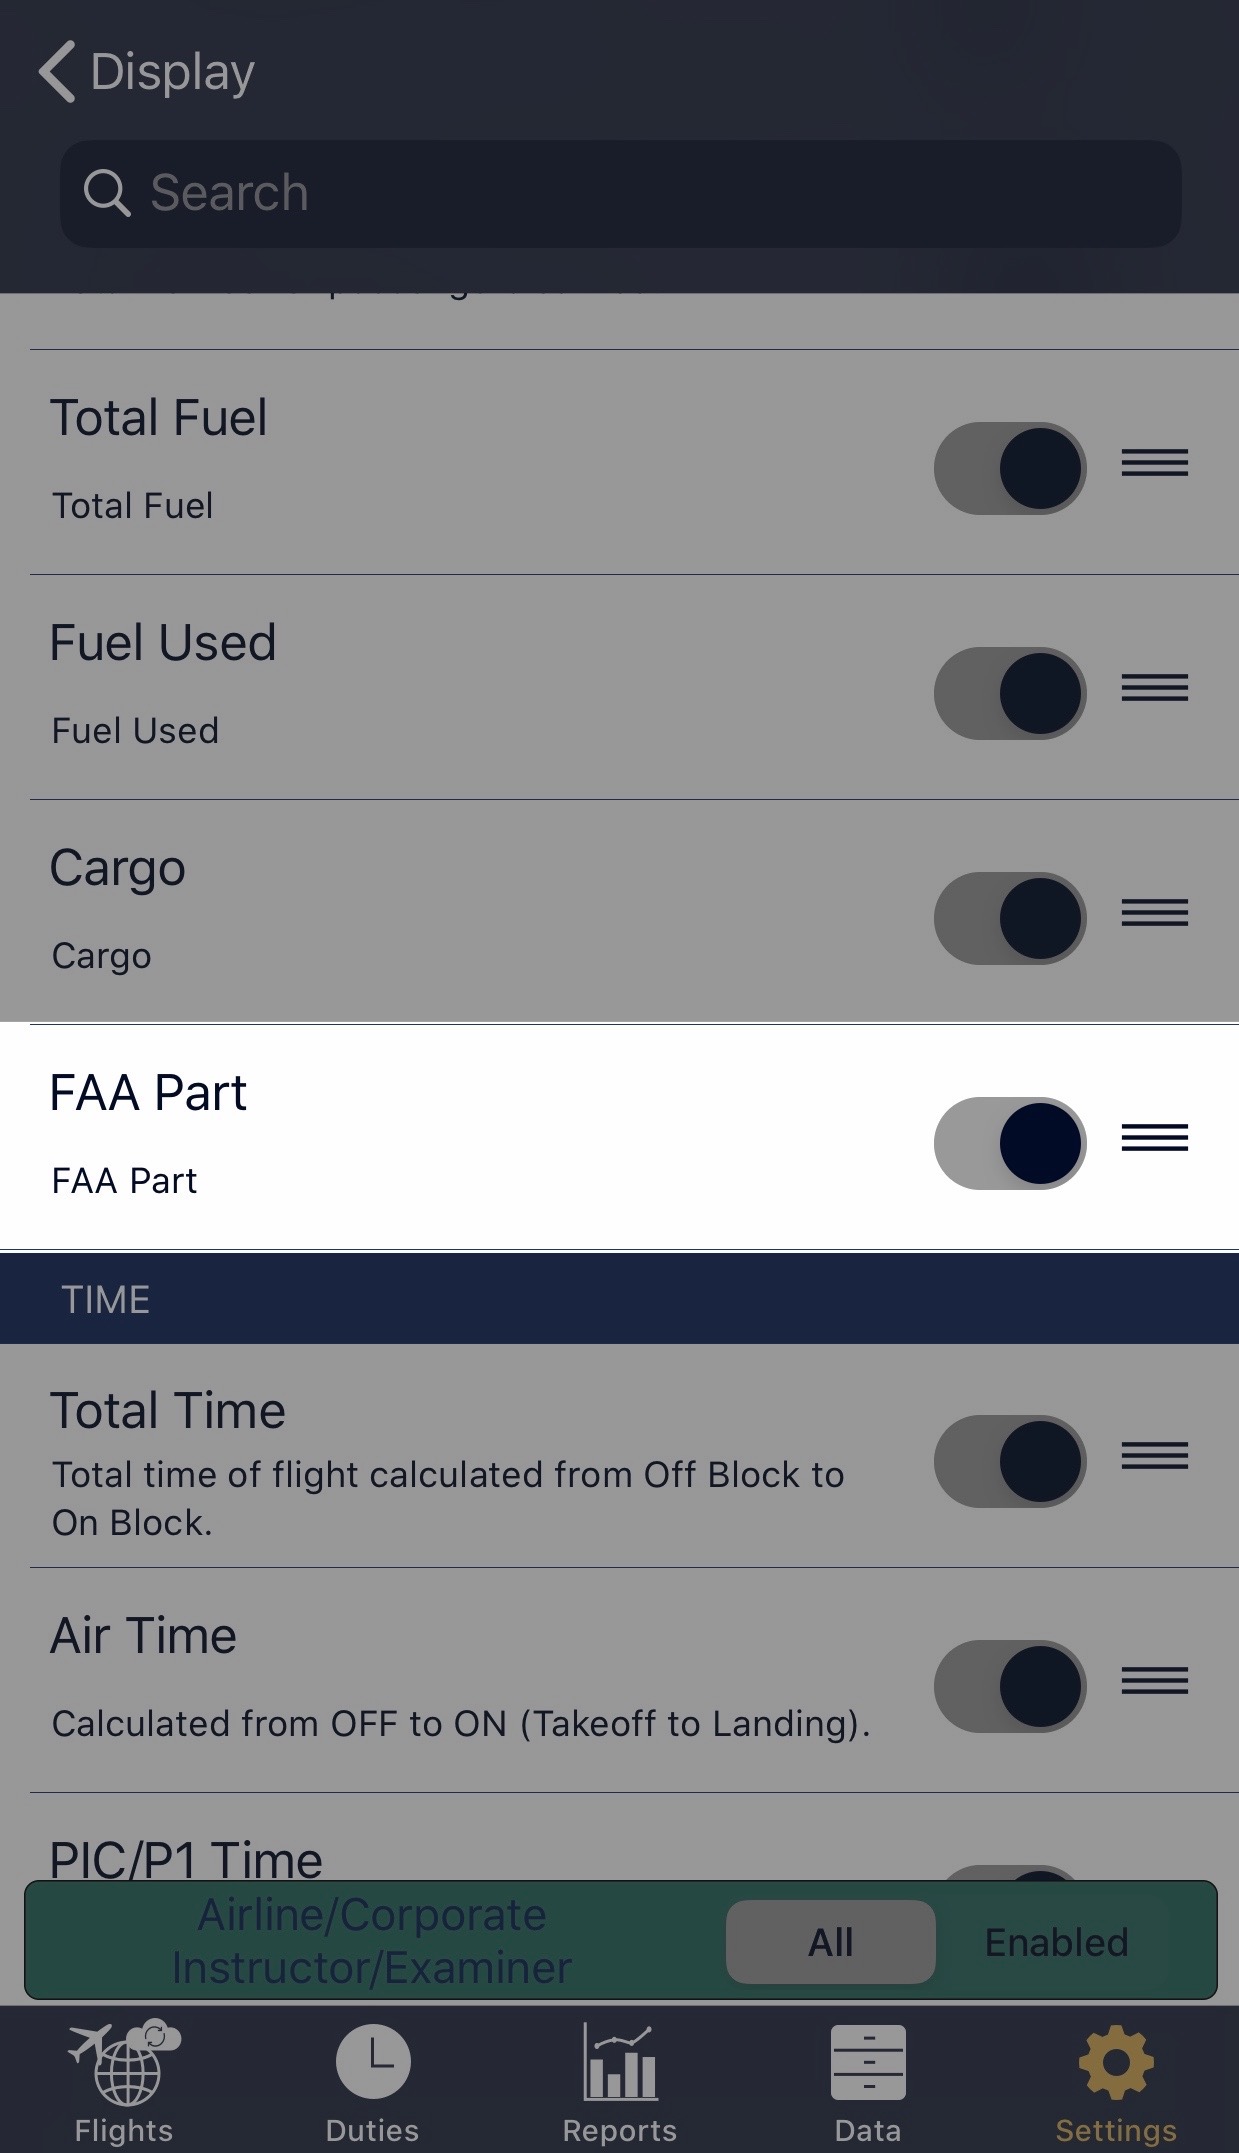 FAA Part Selector